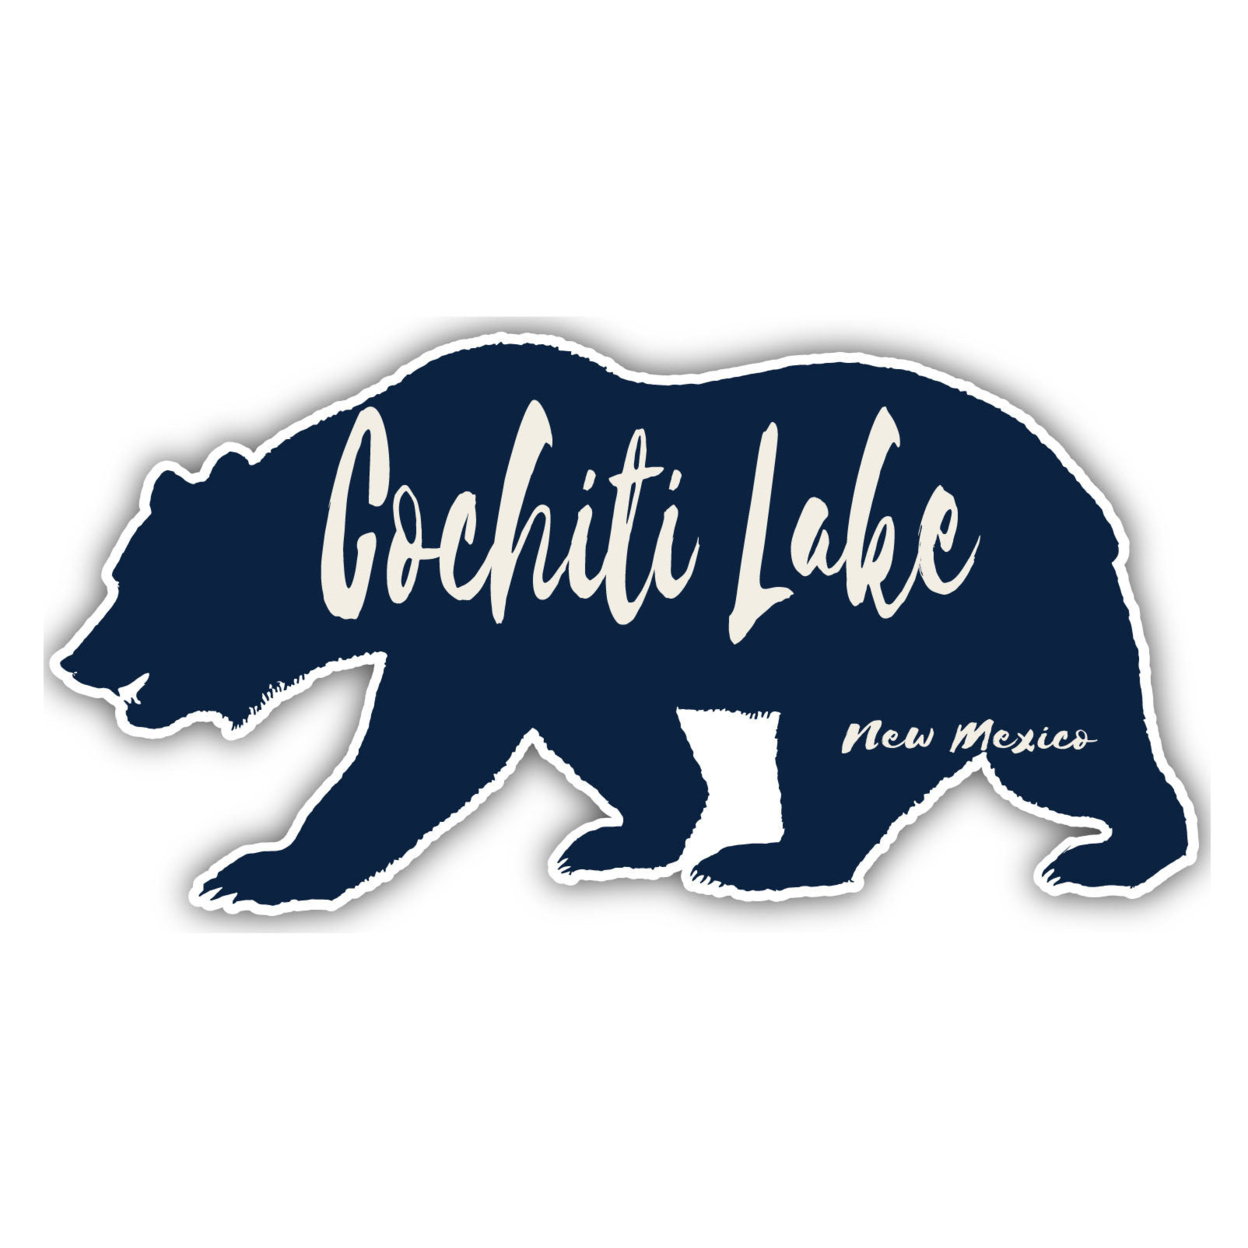 Cochiti Lake New Mexico Souvenir Decorative Stickers (Choose Theme And Size) - 4-Pack, 4-Inch, Bear